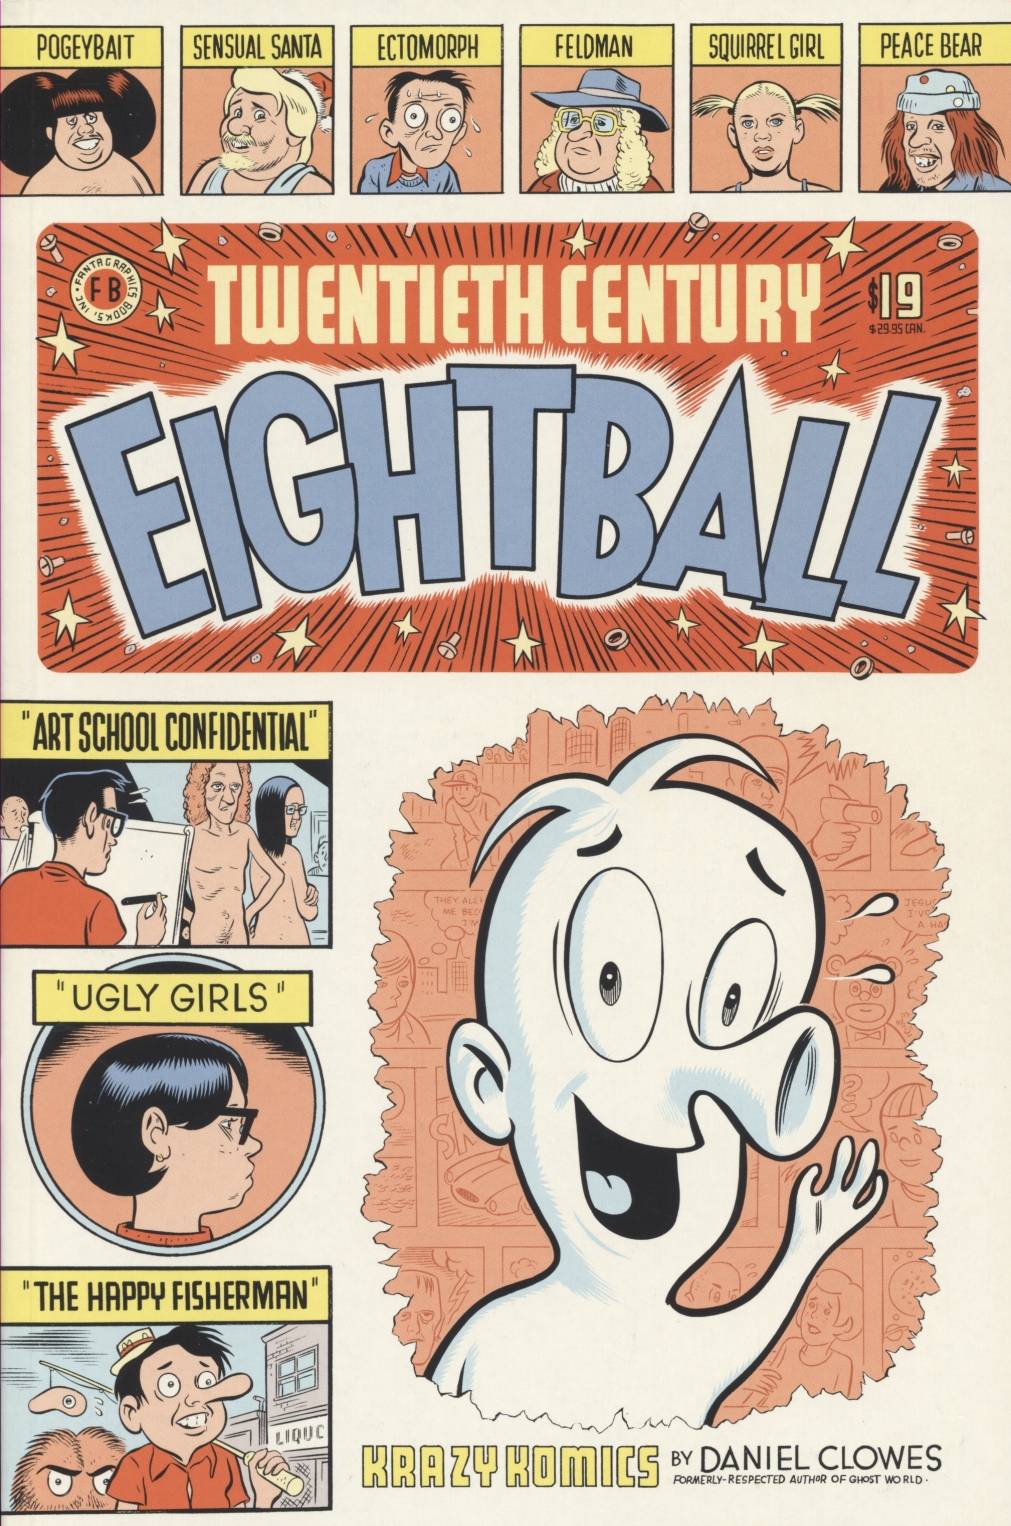 Twentieth Century Eightball softcover